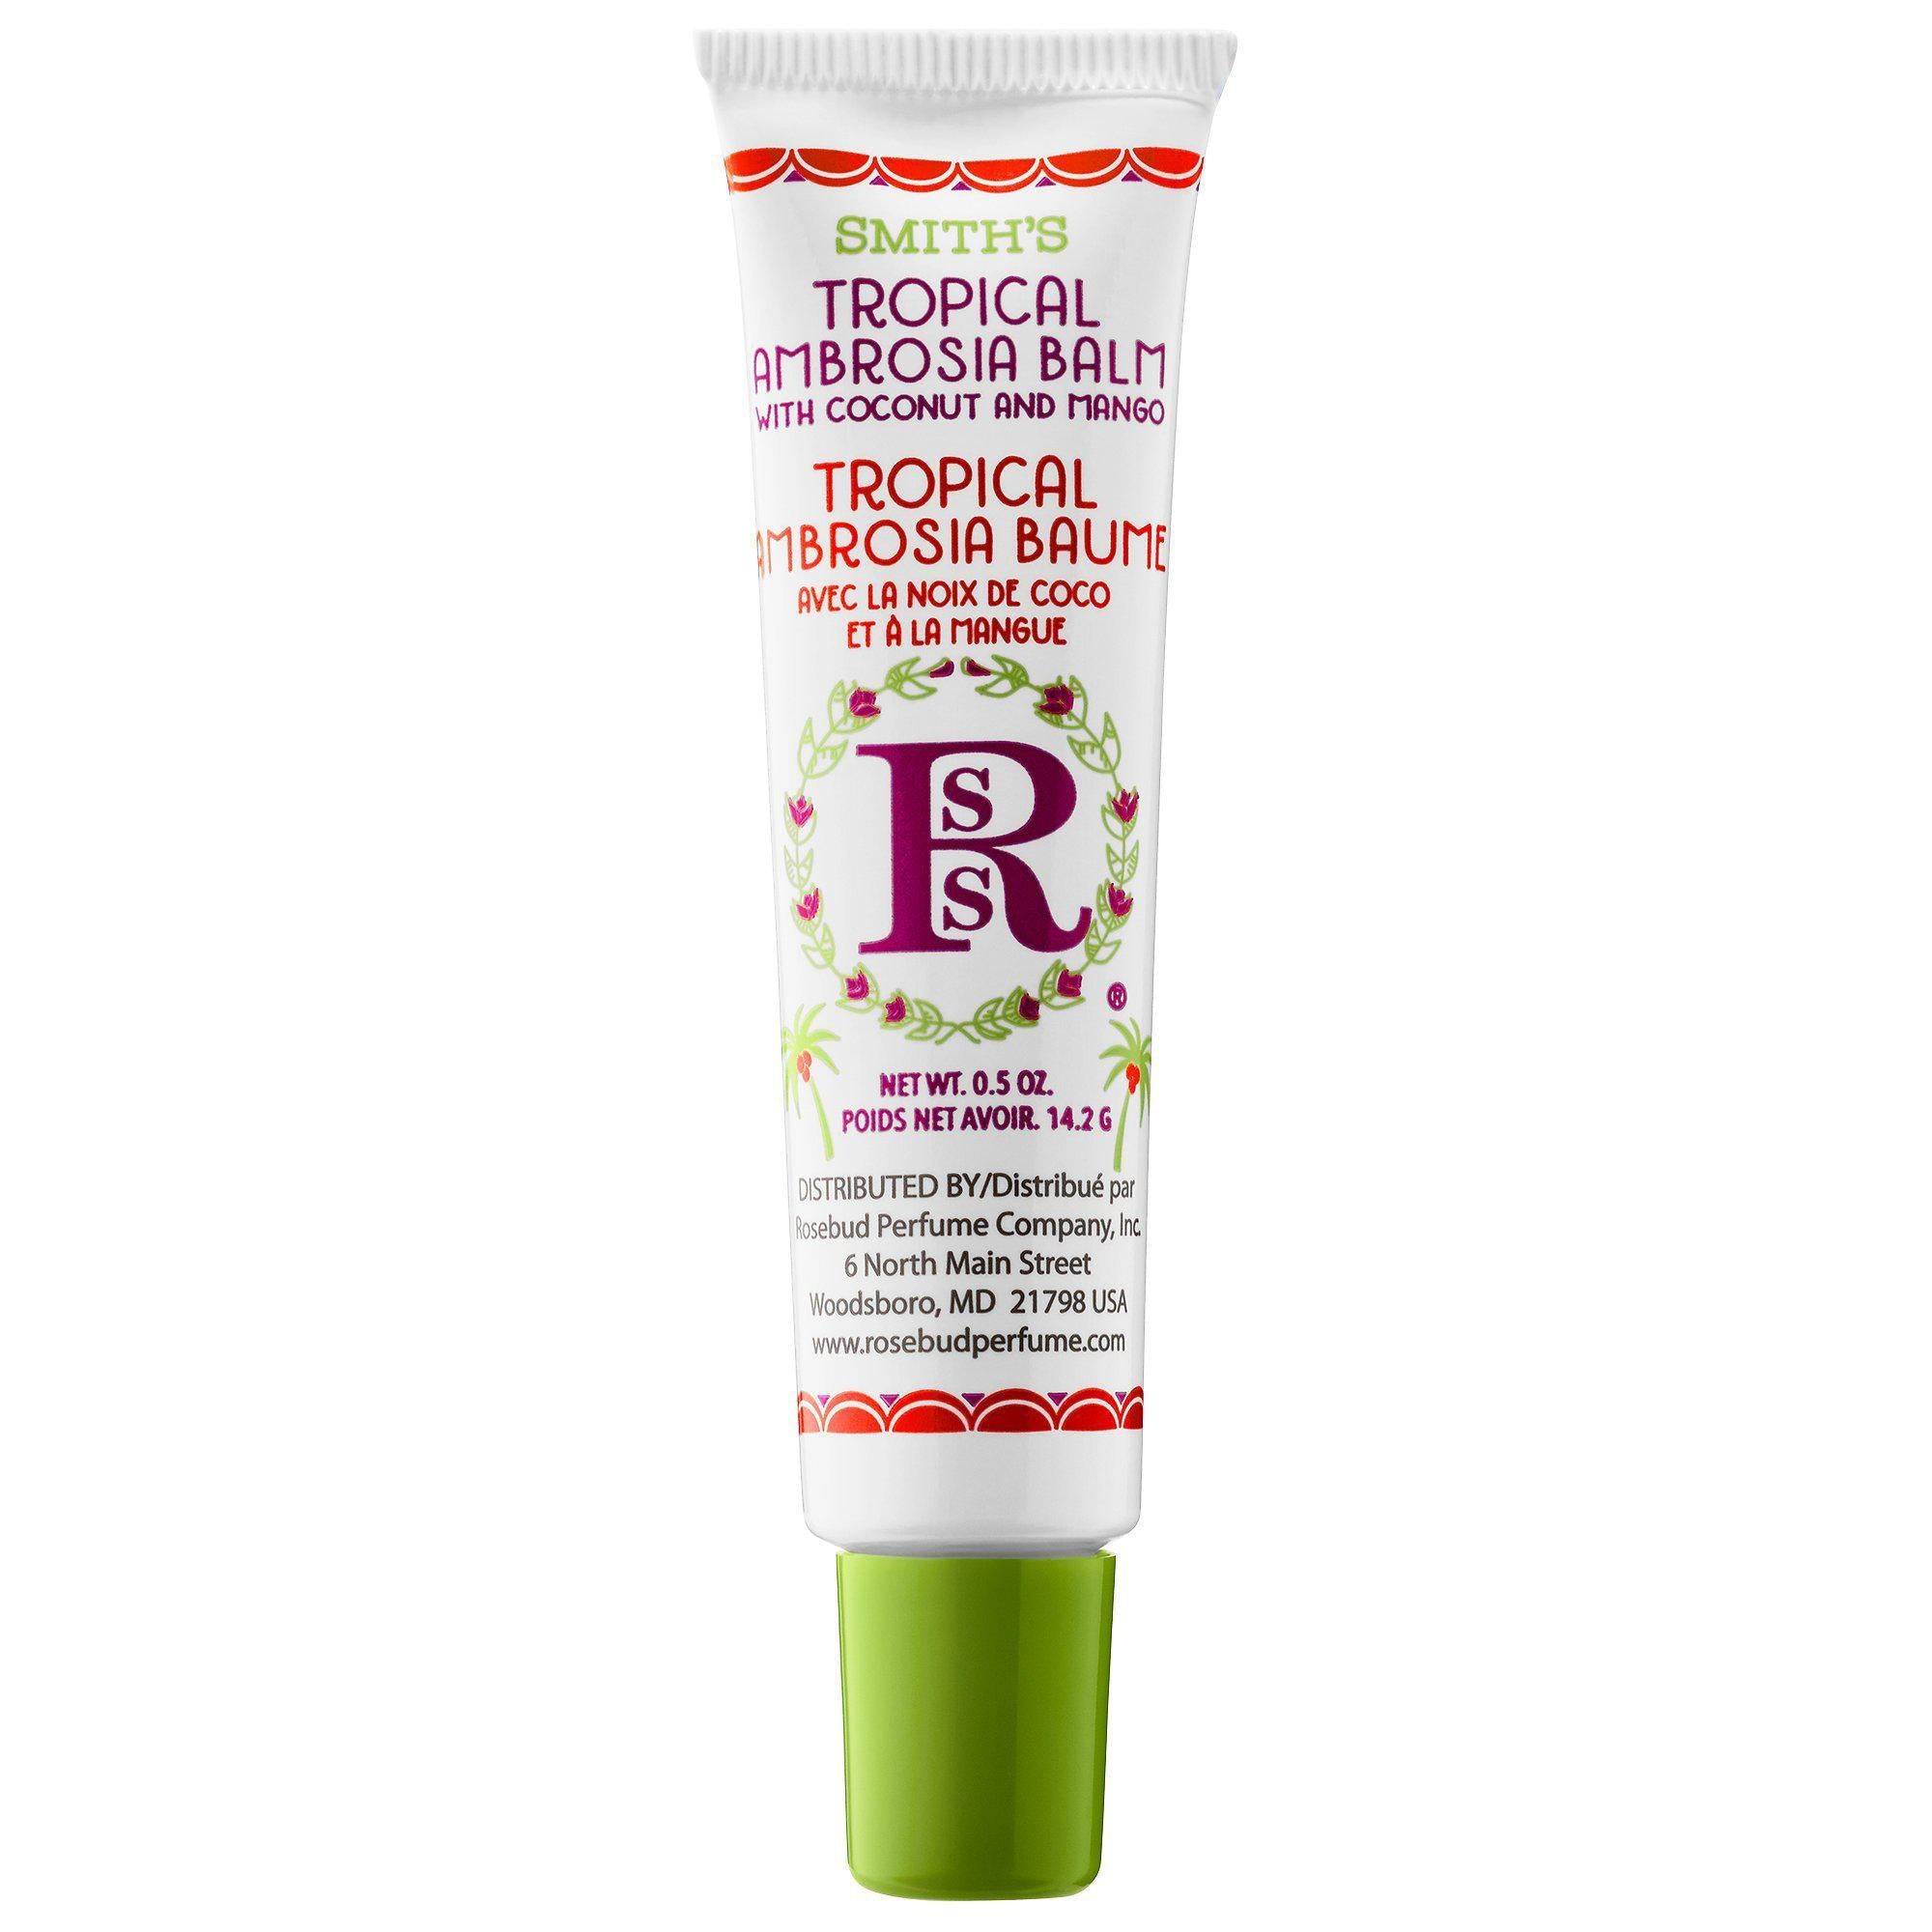 Rosebud Perfume Co Smith's Tropical Ambrosia Lip Balm Tube - 0.5 oz - BeautyOfASite - Central Illinois Gifts, Fashion & Beauty Boutique